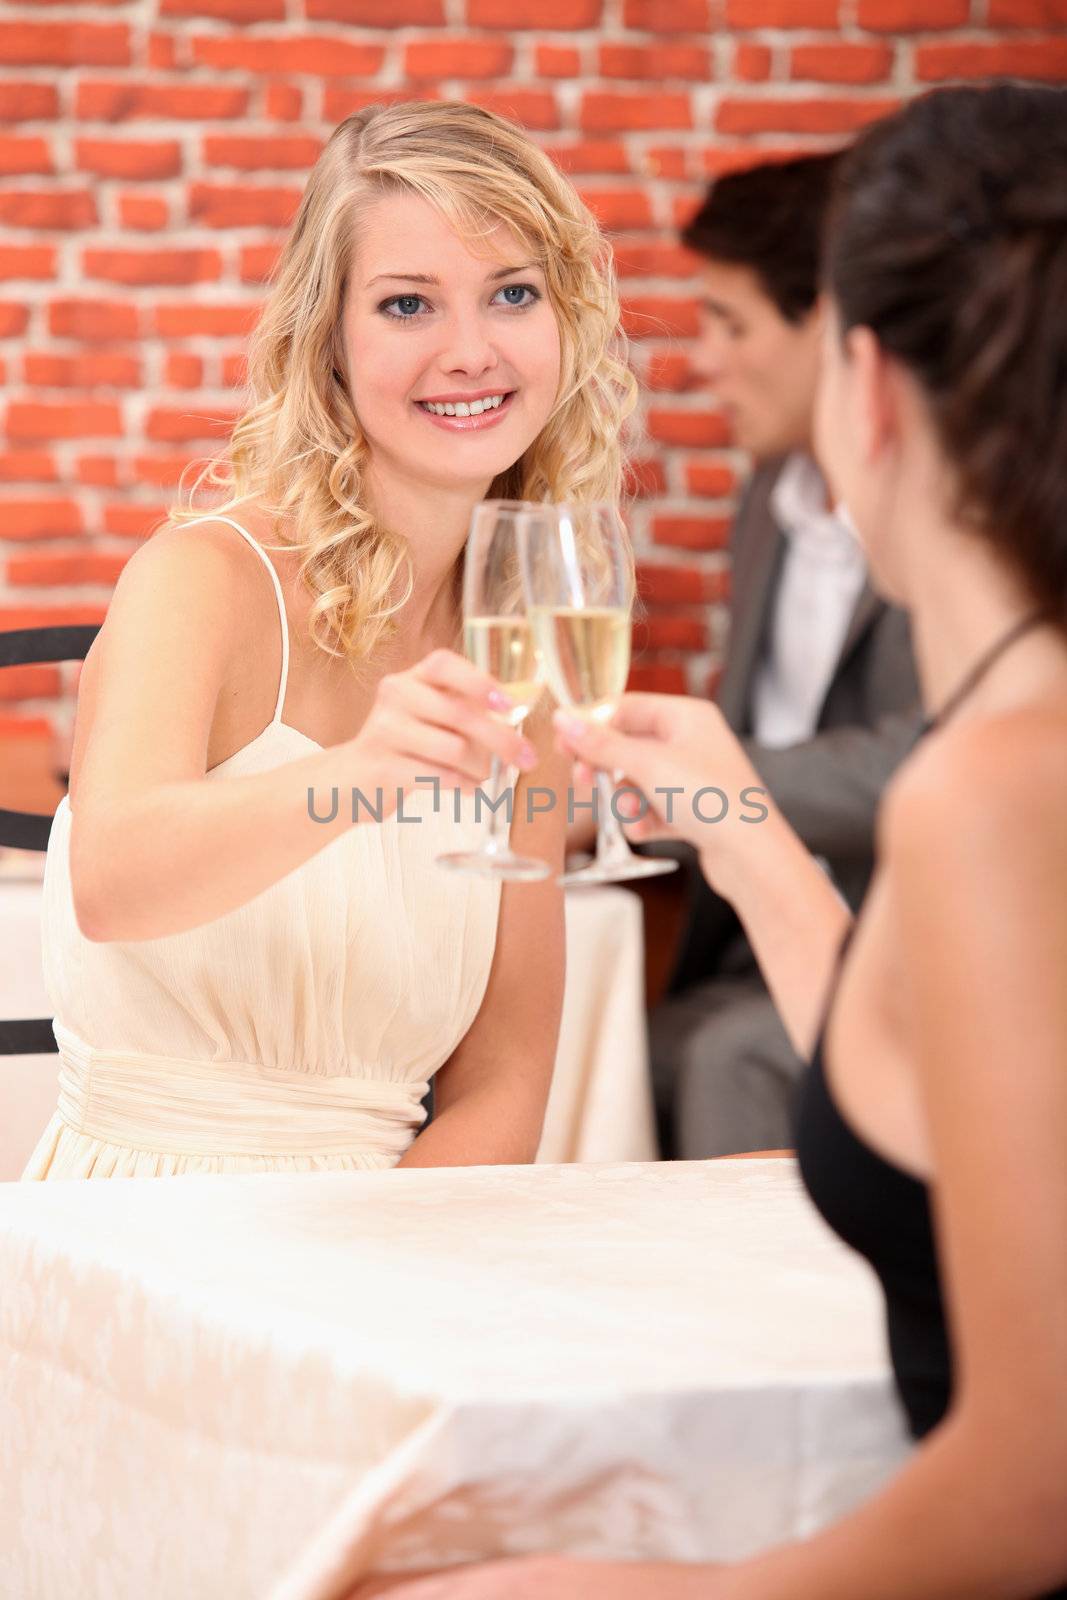 Girls drinking champagne in a restaurant